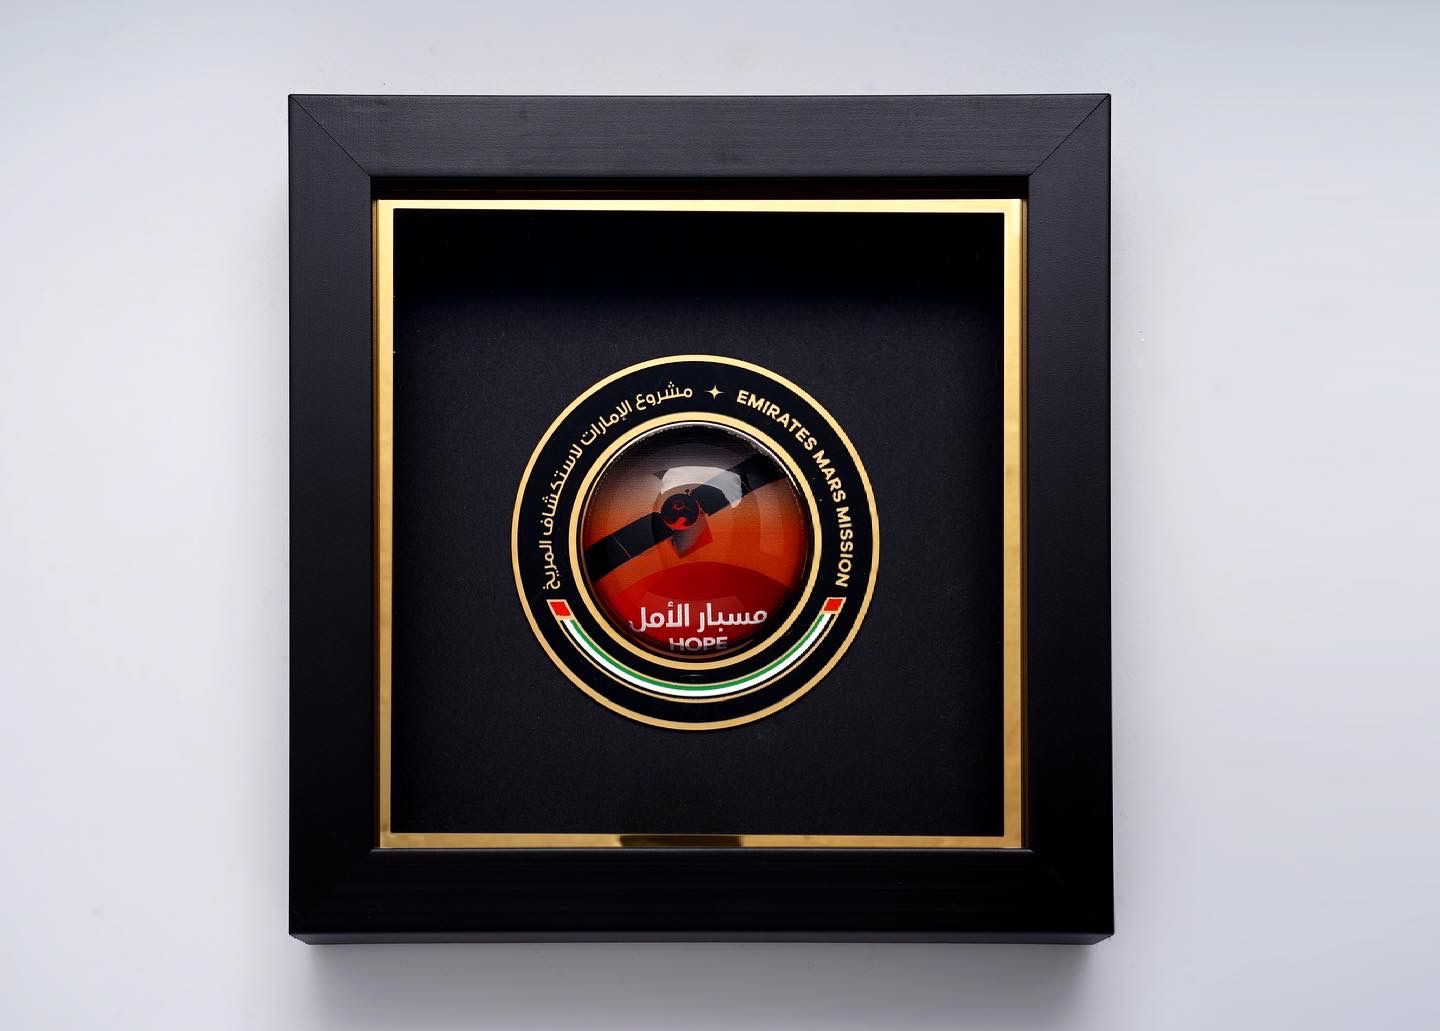 Rovatti Emirates Mars Mission - Hope Trophy